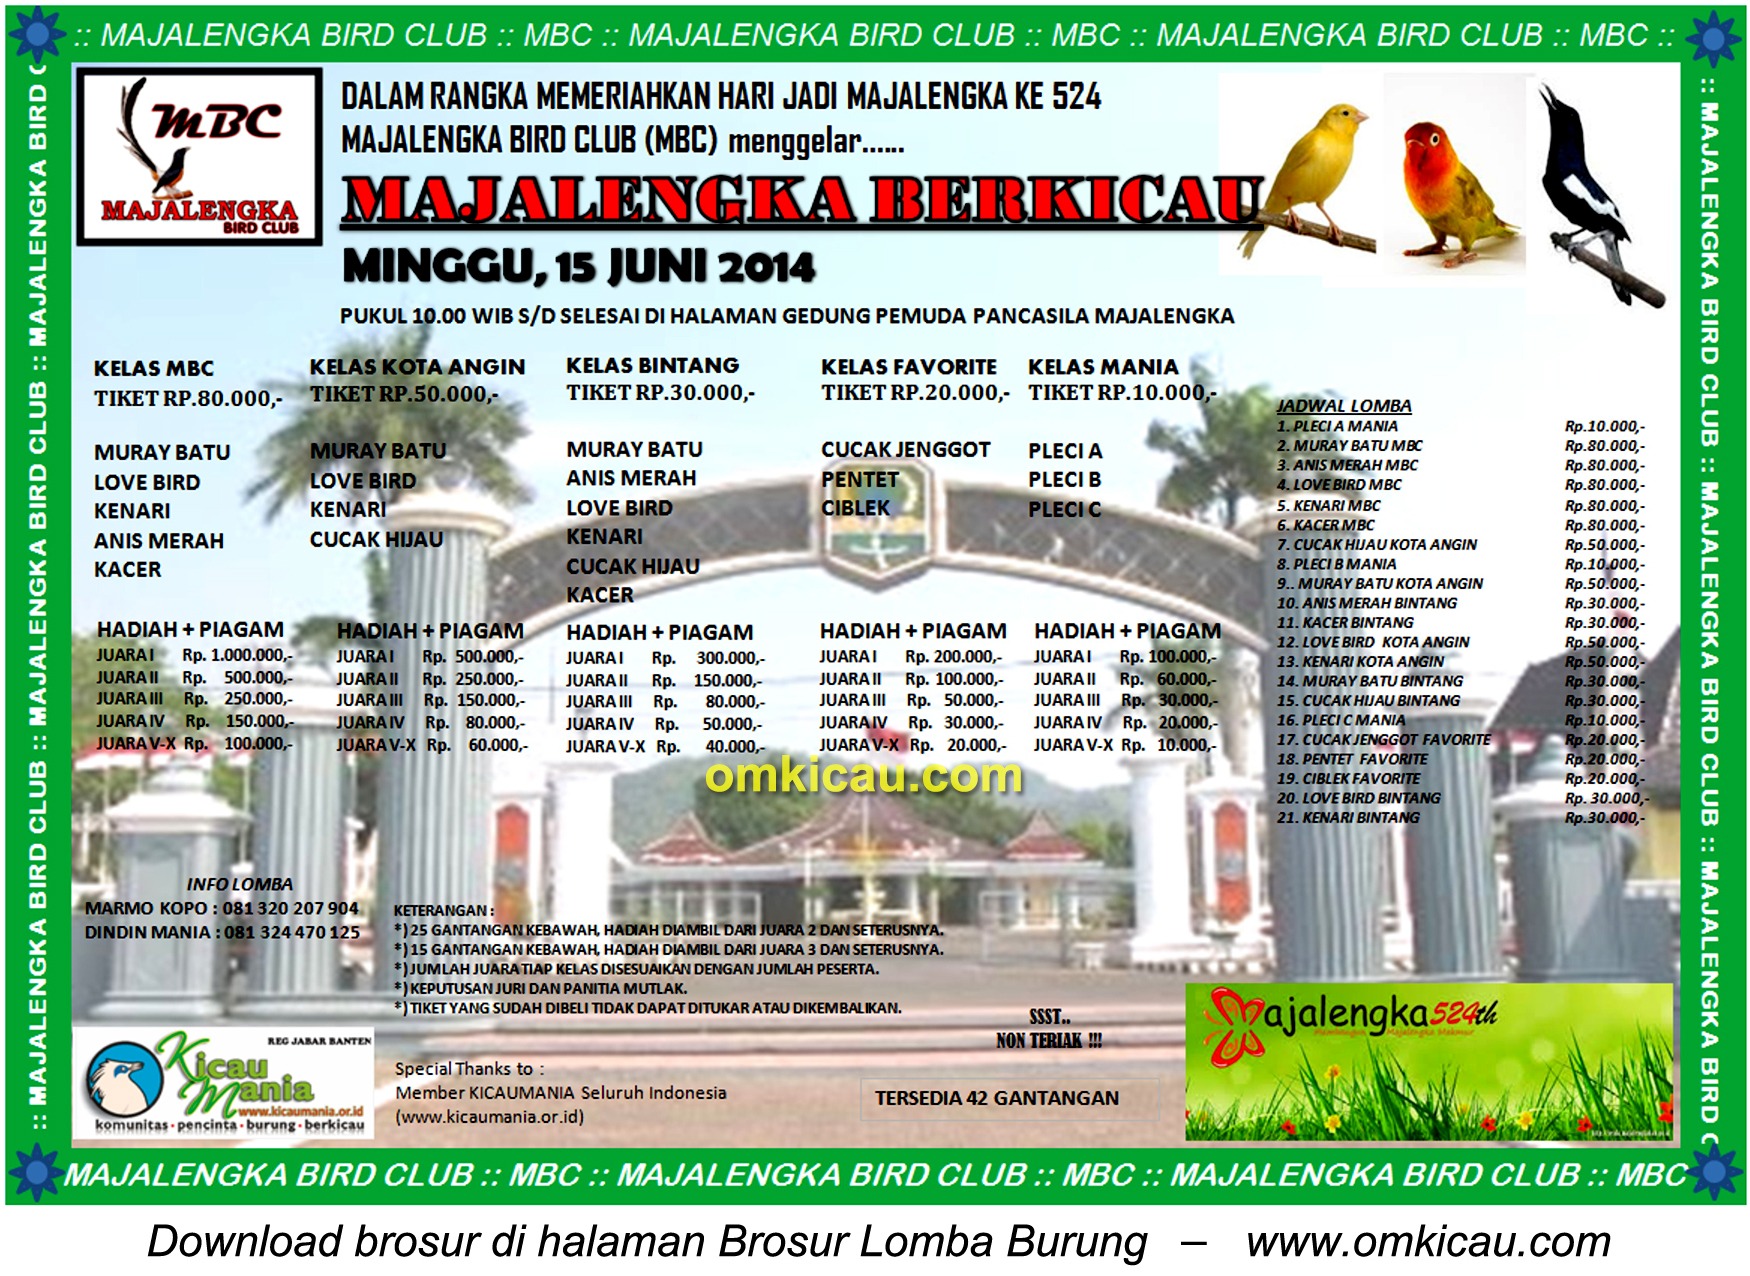 Brosur Lomba Burung Majalengka Berkicau, Majalengka, 15 Juni 2014